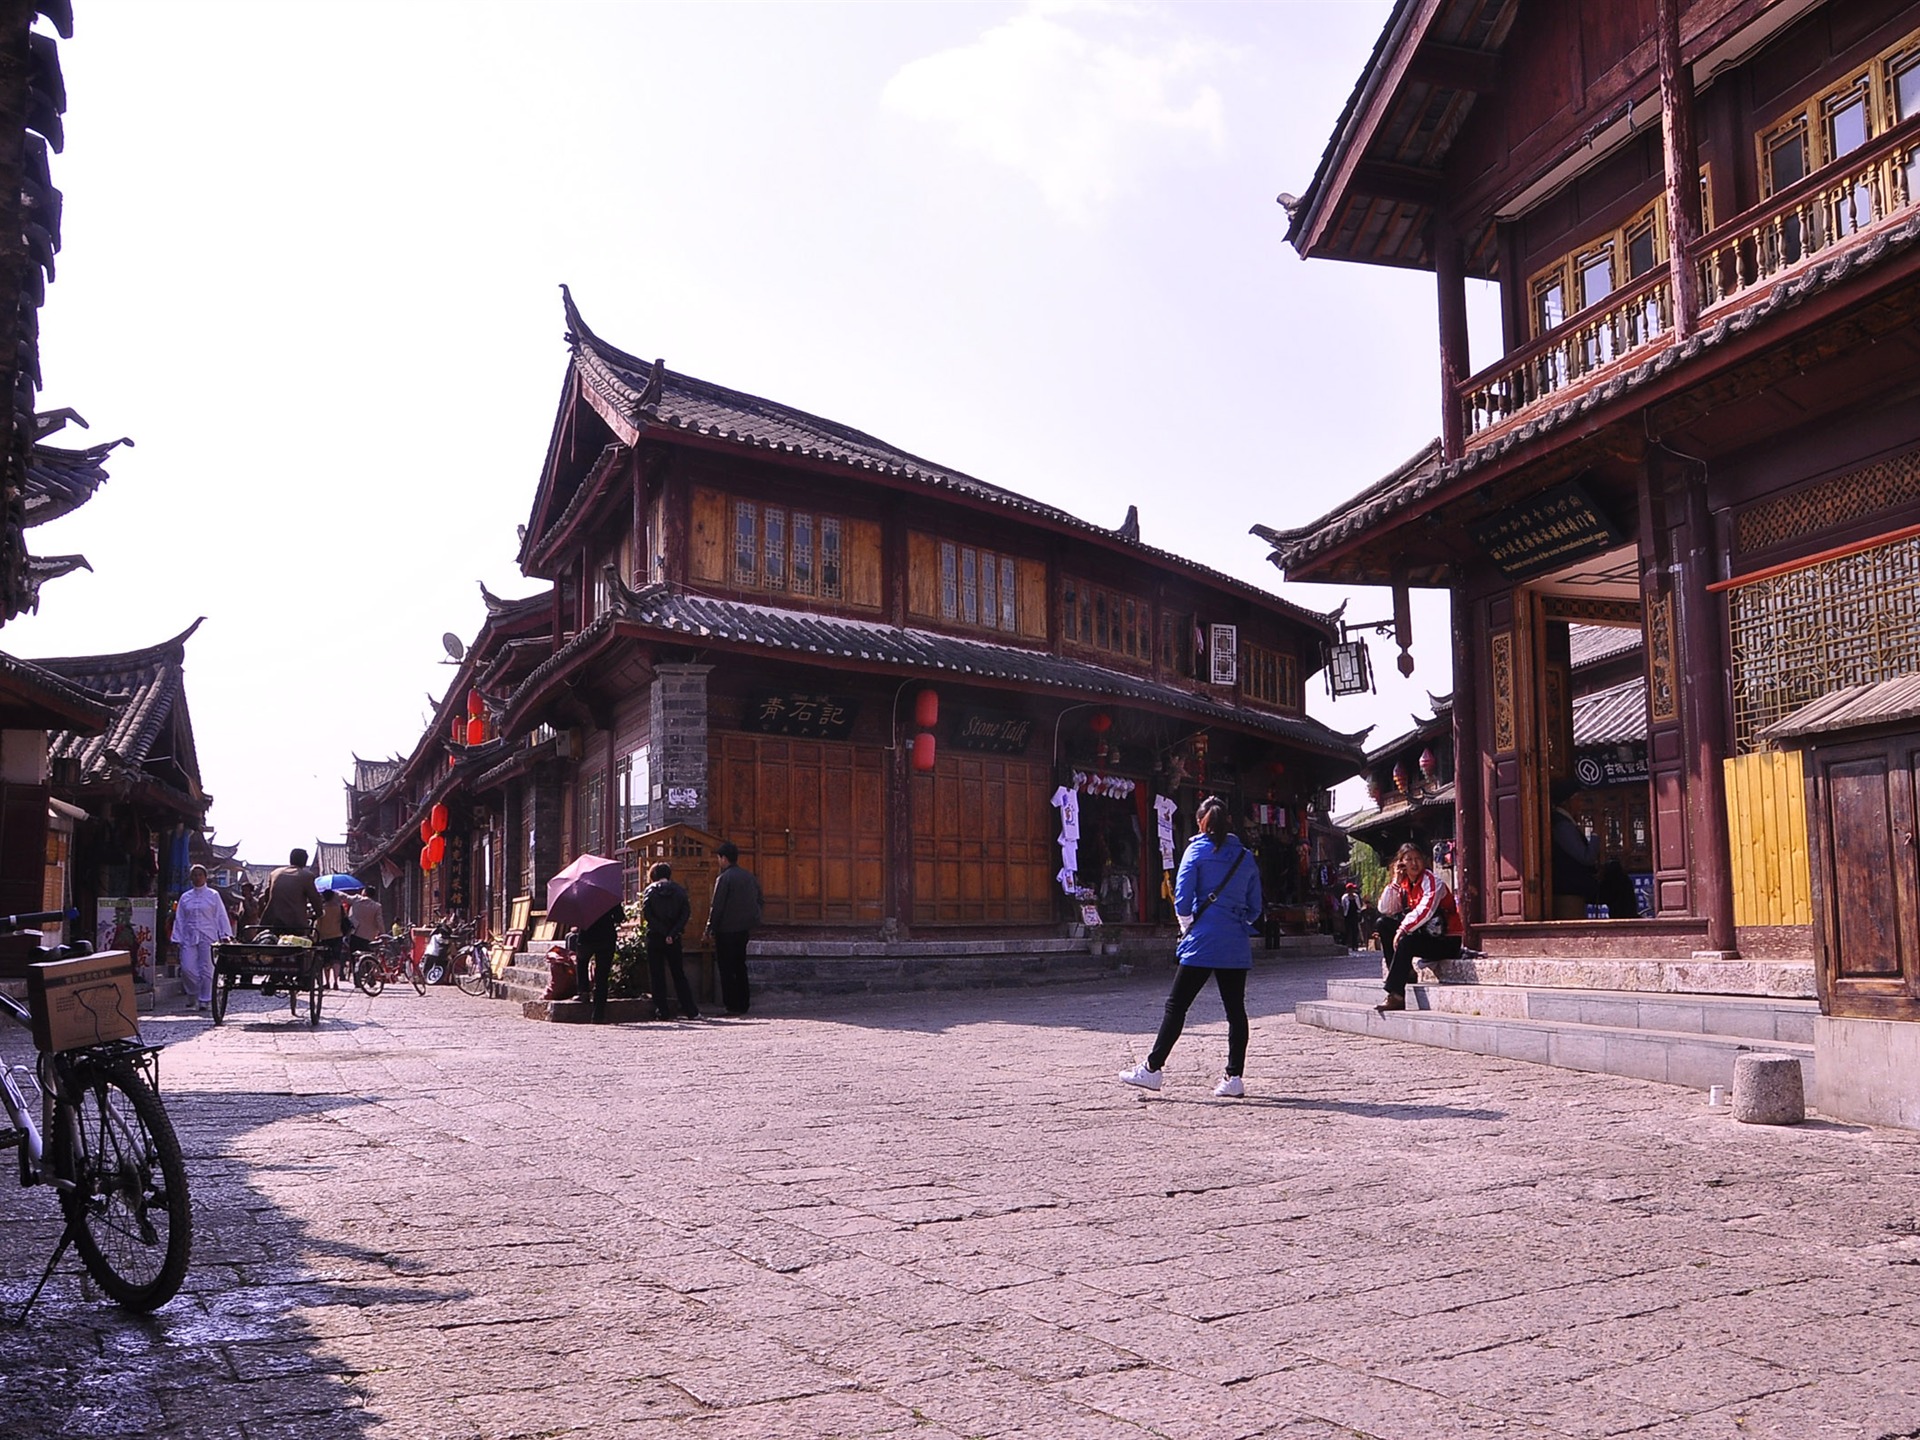 Lijiang ancient town atmosphere (2) (old Hong OK works) #14 - 1920x1440